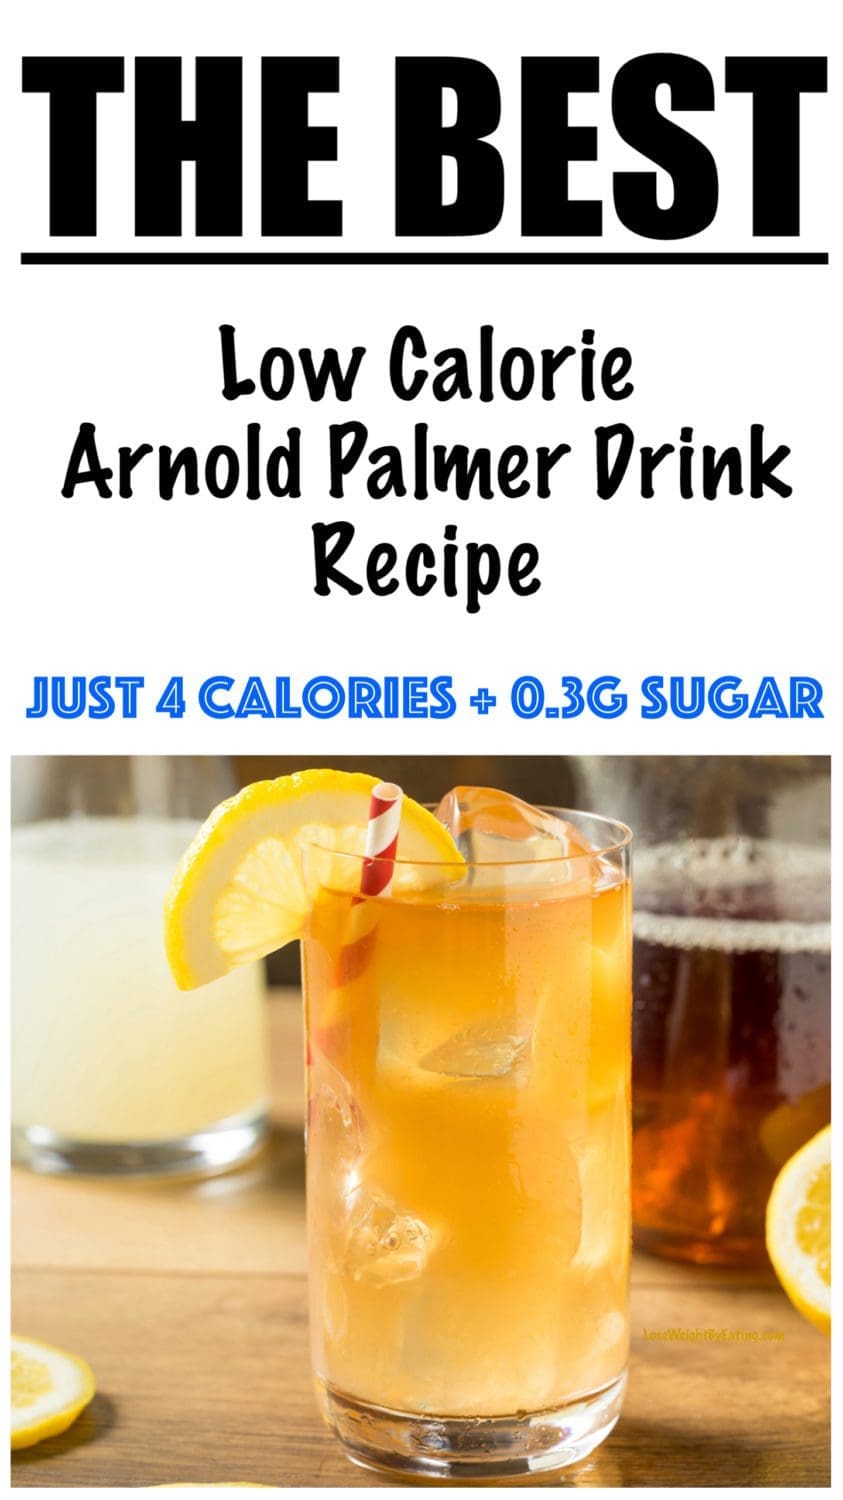 Arnold Palmer Drink Recipe